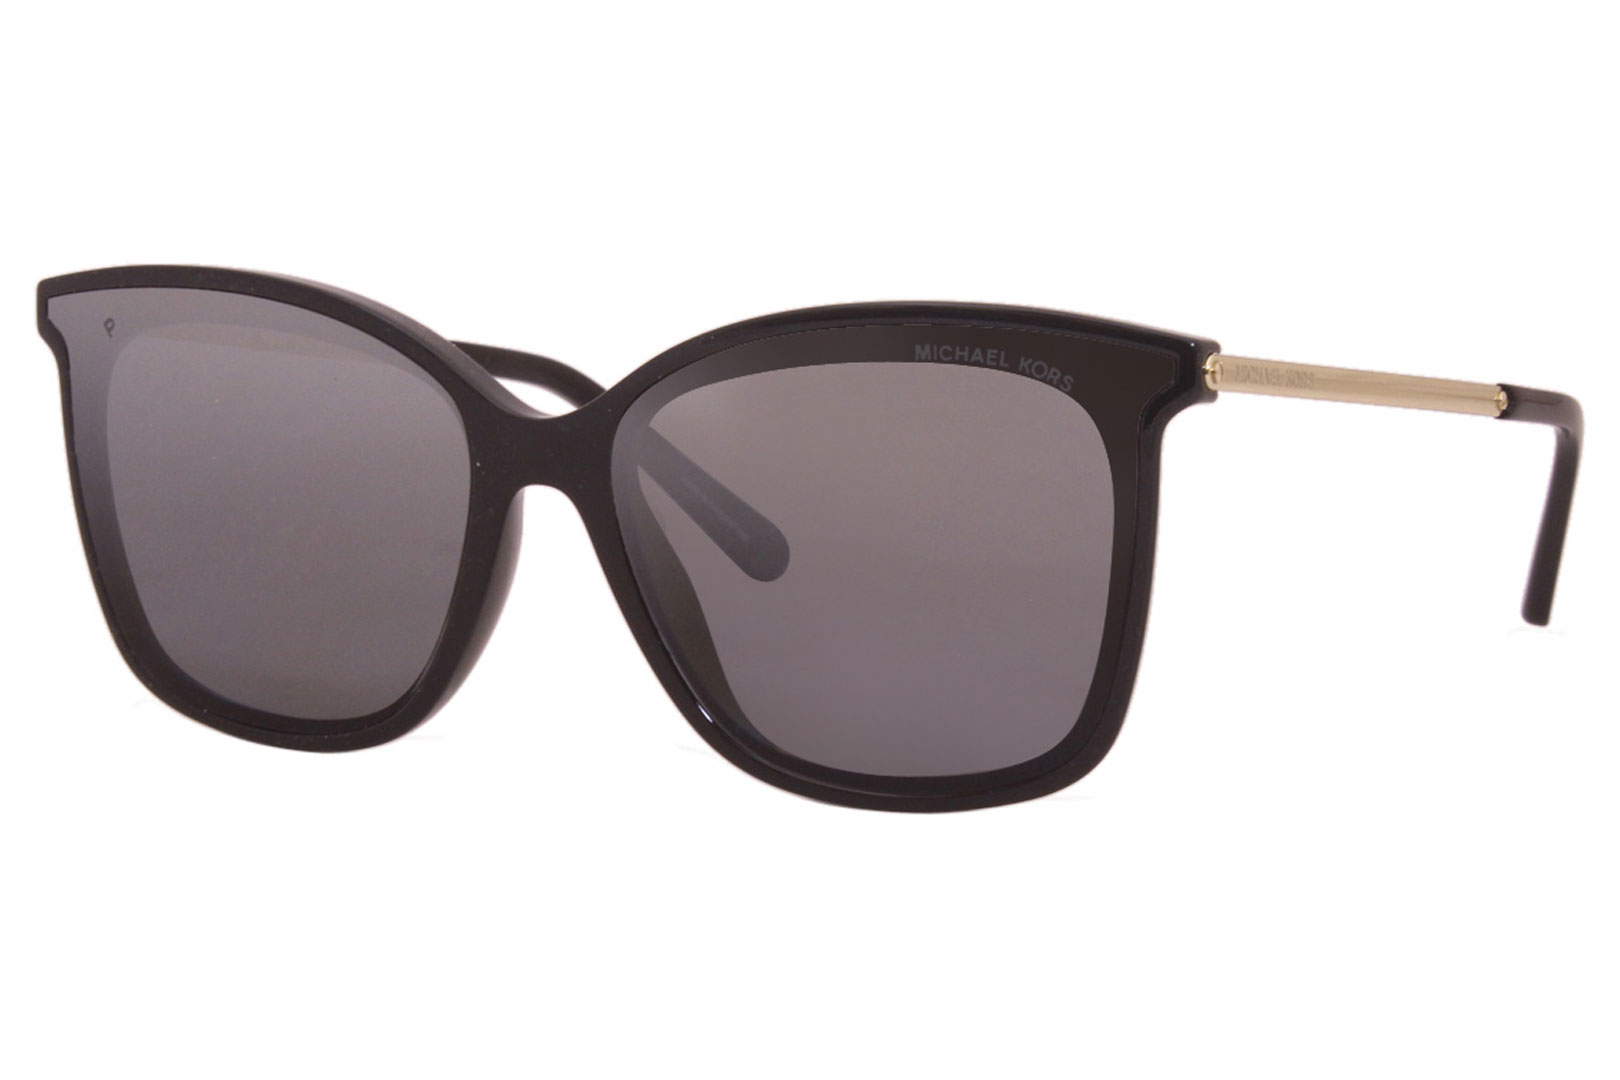 MICHAEL KORS Sunglasses MK1119 in 101484  goldbrown polarized  Breuninger